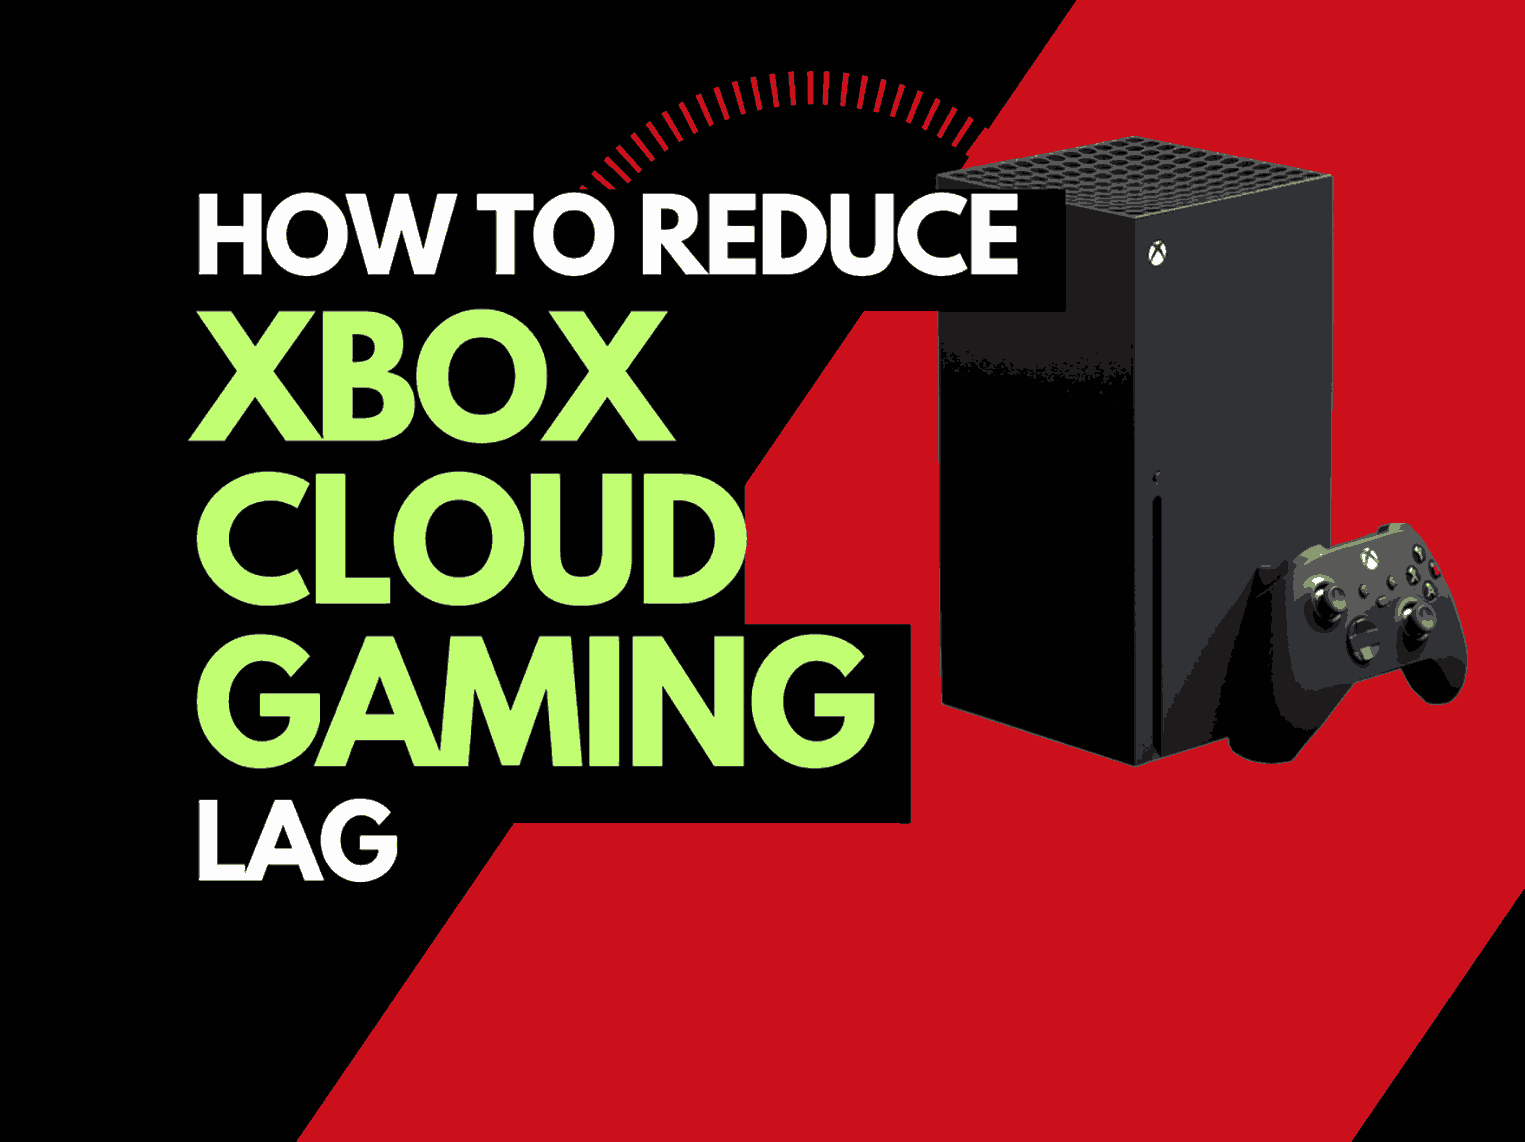 xbox cloud gaming lag